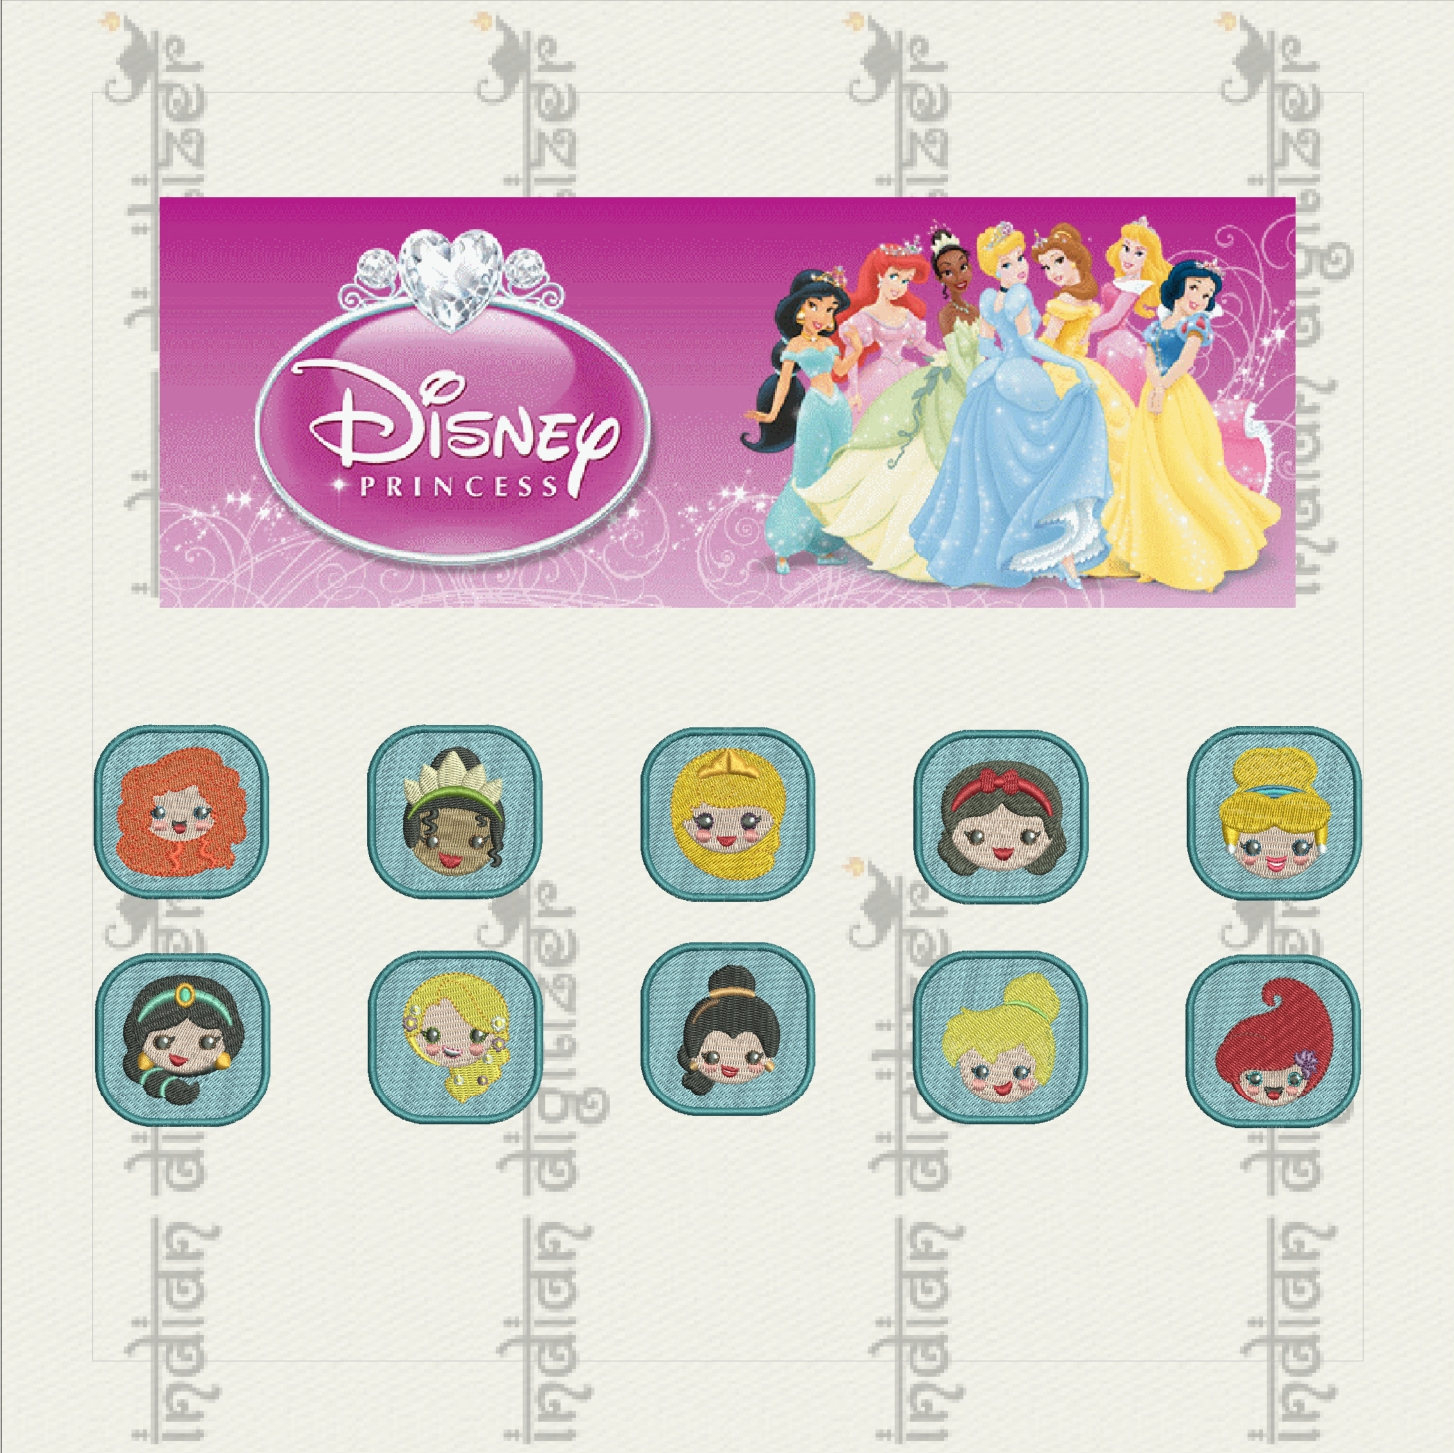 Disney Embroidery Patterns Disney Princess Emojis Machine Embroidery Designs 10 Designs For Key Fobs Tshirts Hats Etc